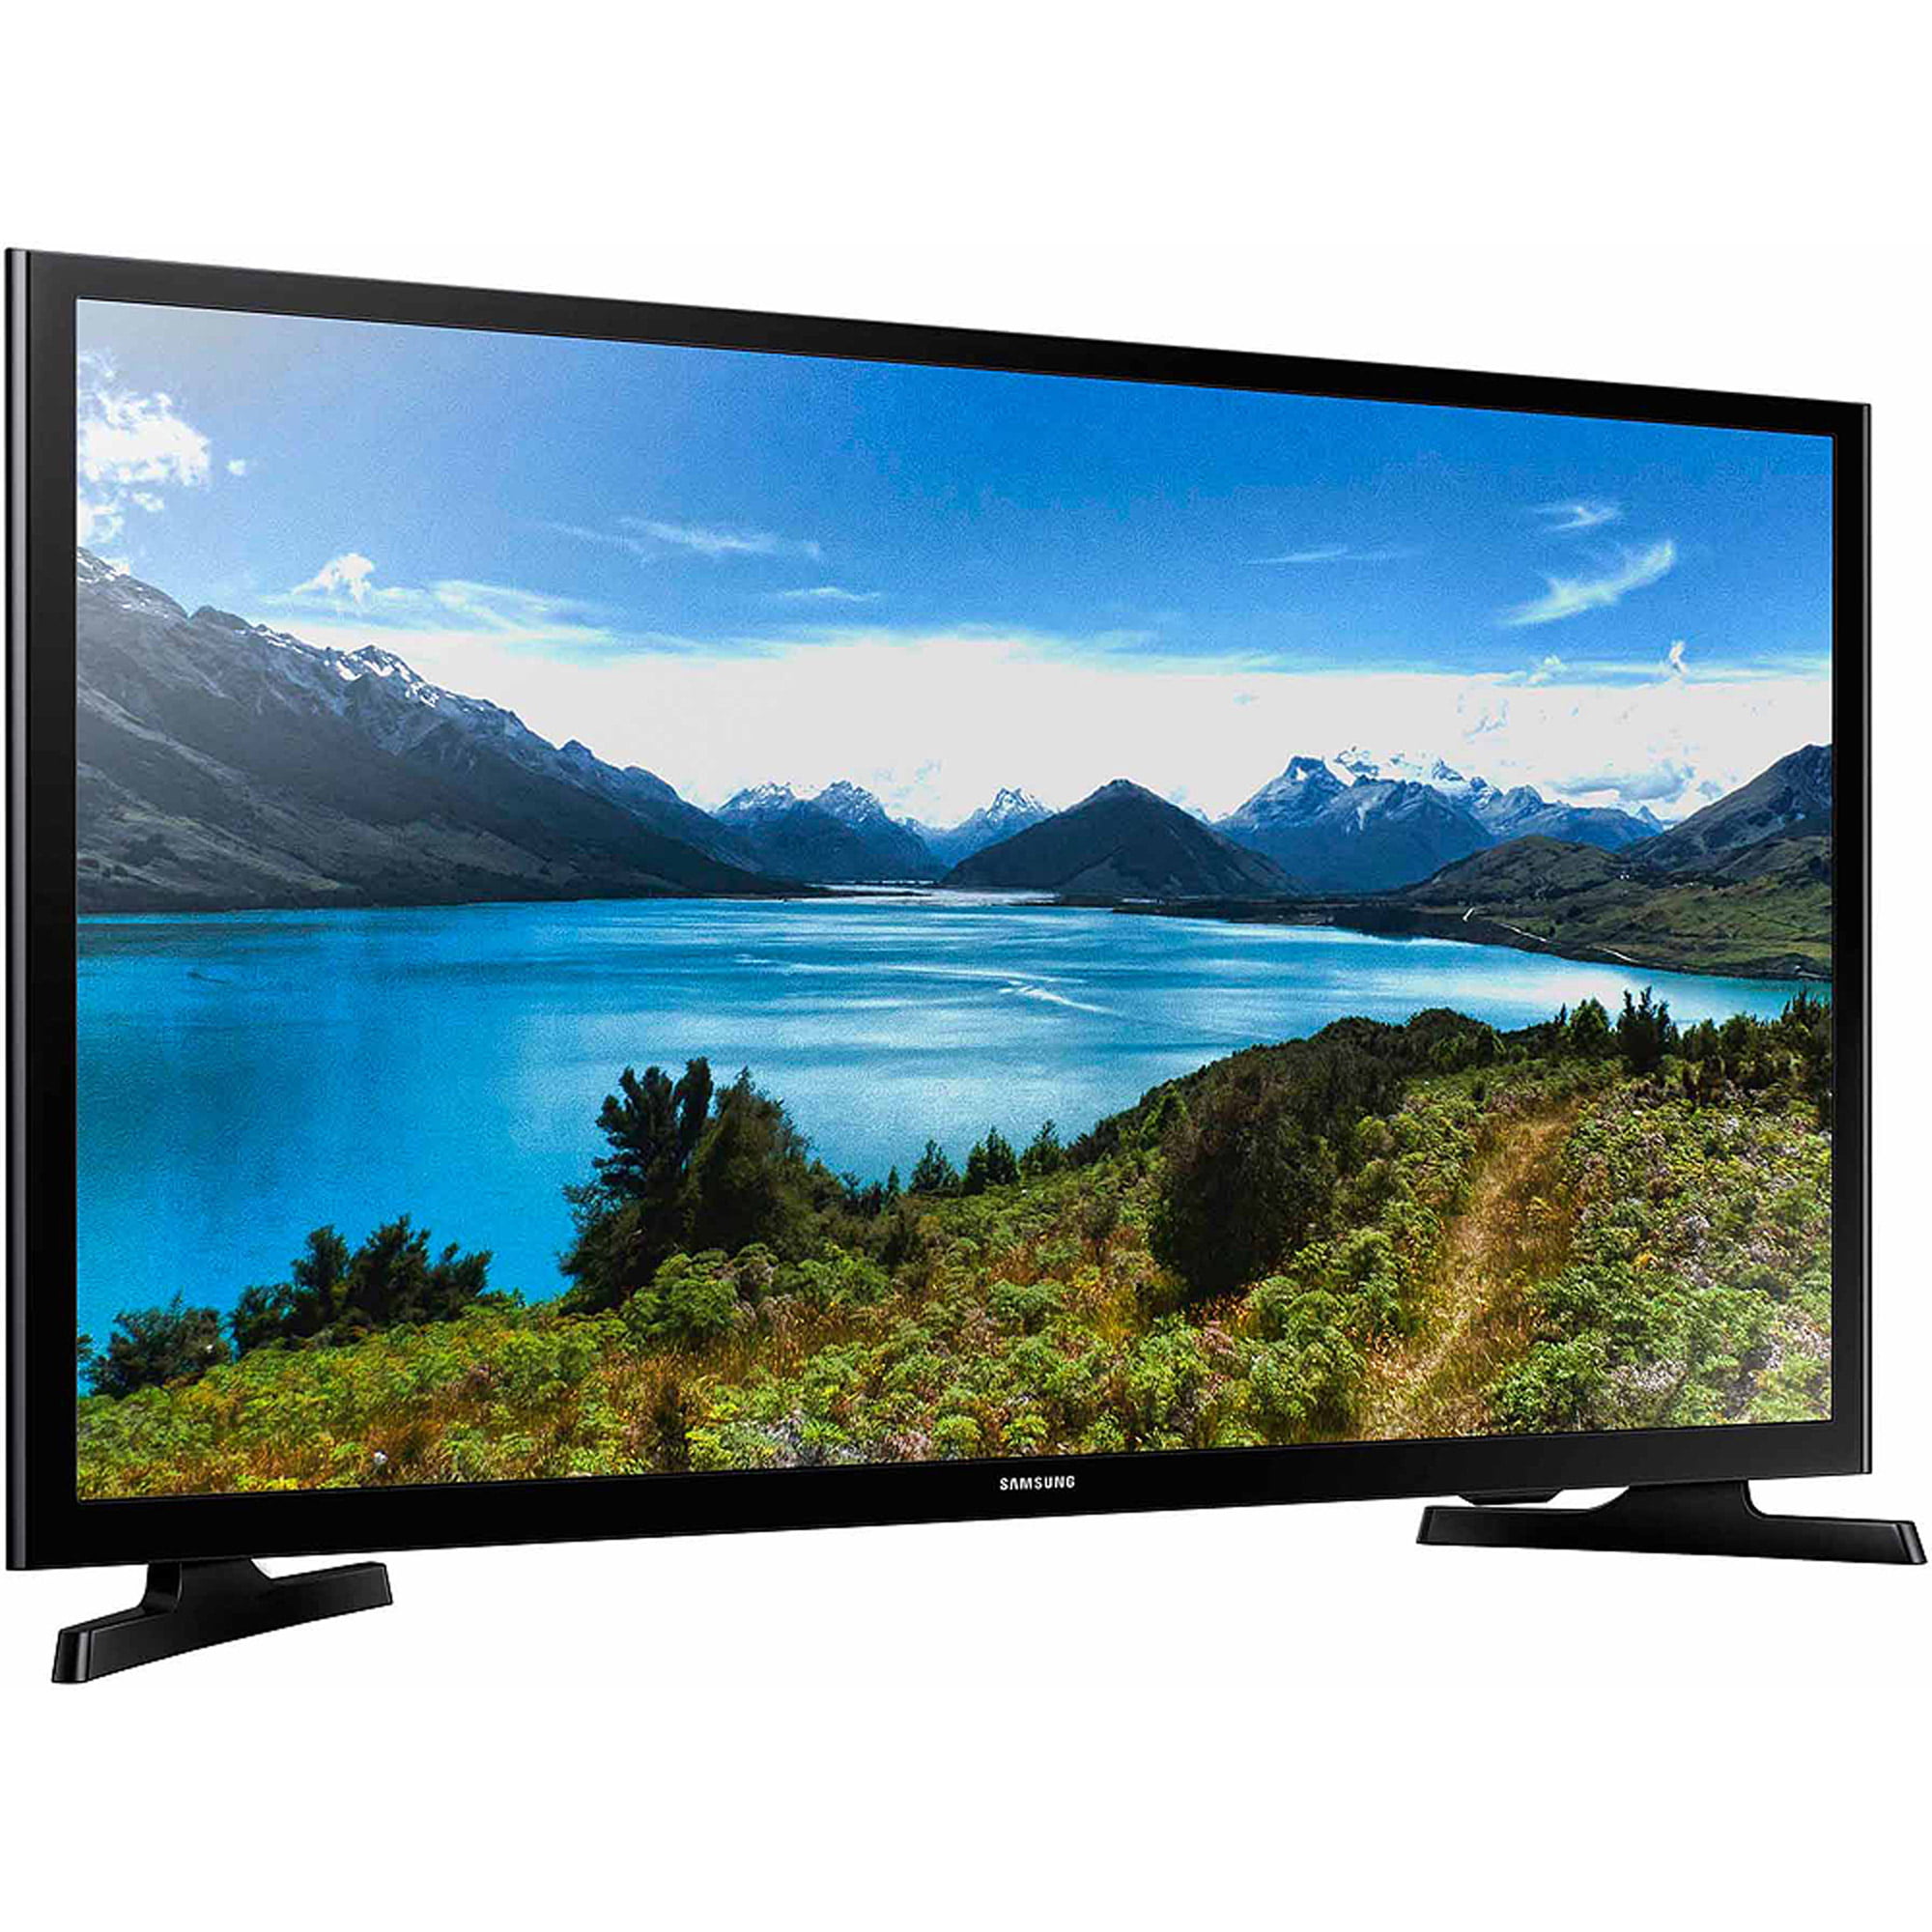 Купить телевизор смарт дешевле. Samsung ue32j4710. Samsung ue32j5200ak. Телевизор самсунг 32 дюйма. Samsung ue32t5300.